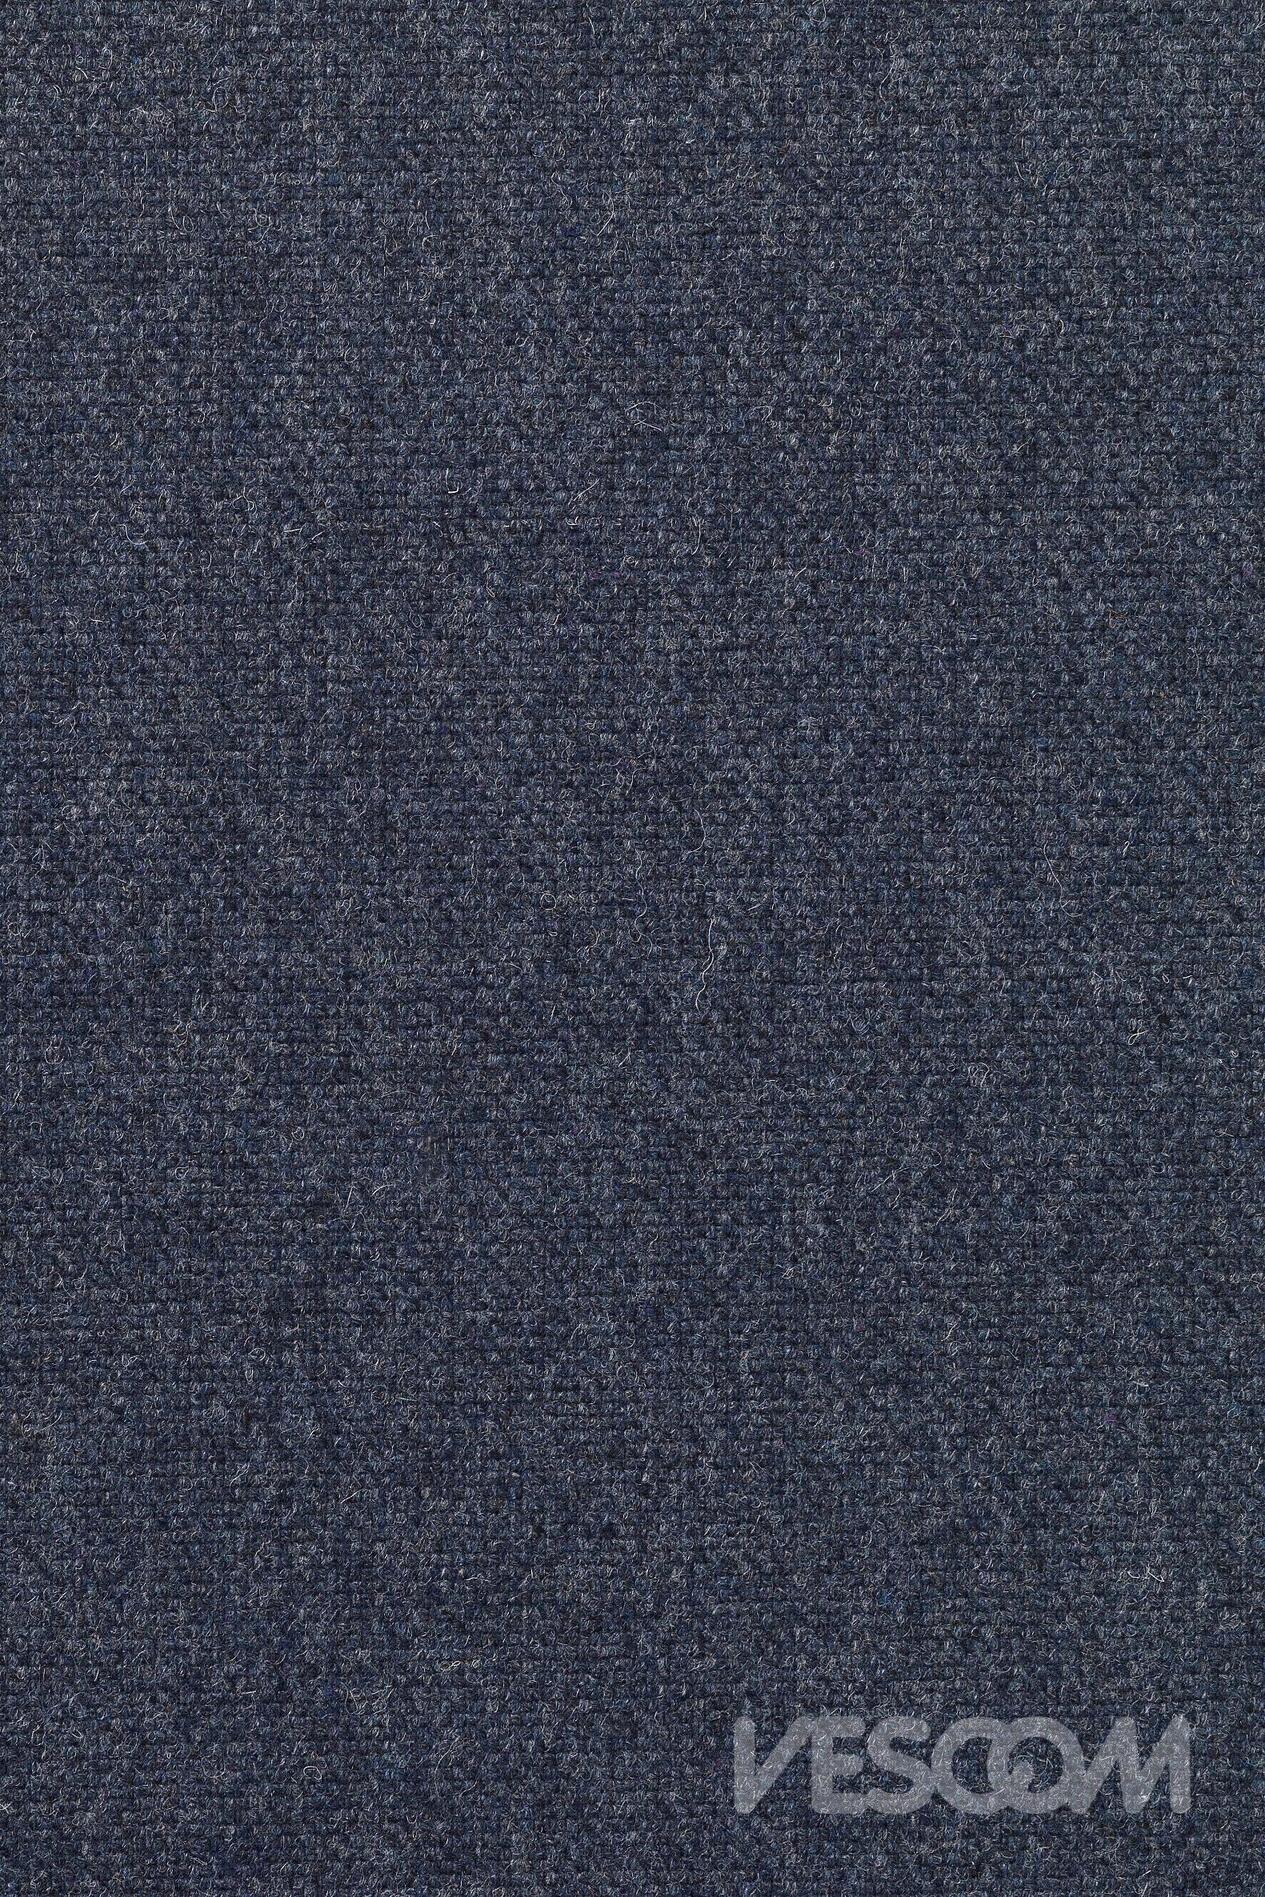 Vescom-Wolin-Upholstery-Fabric-7050.02.jpg